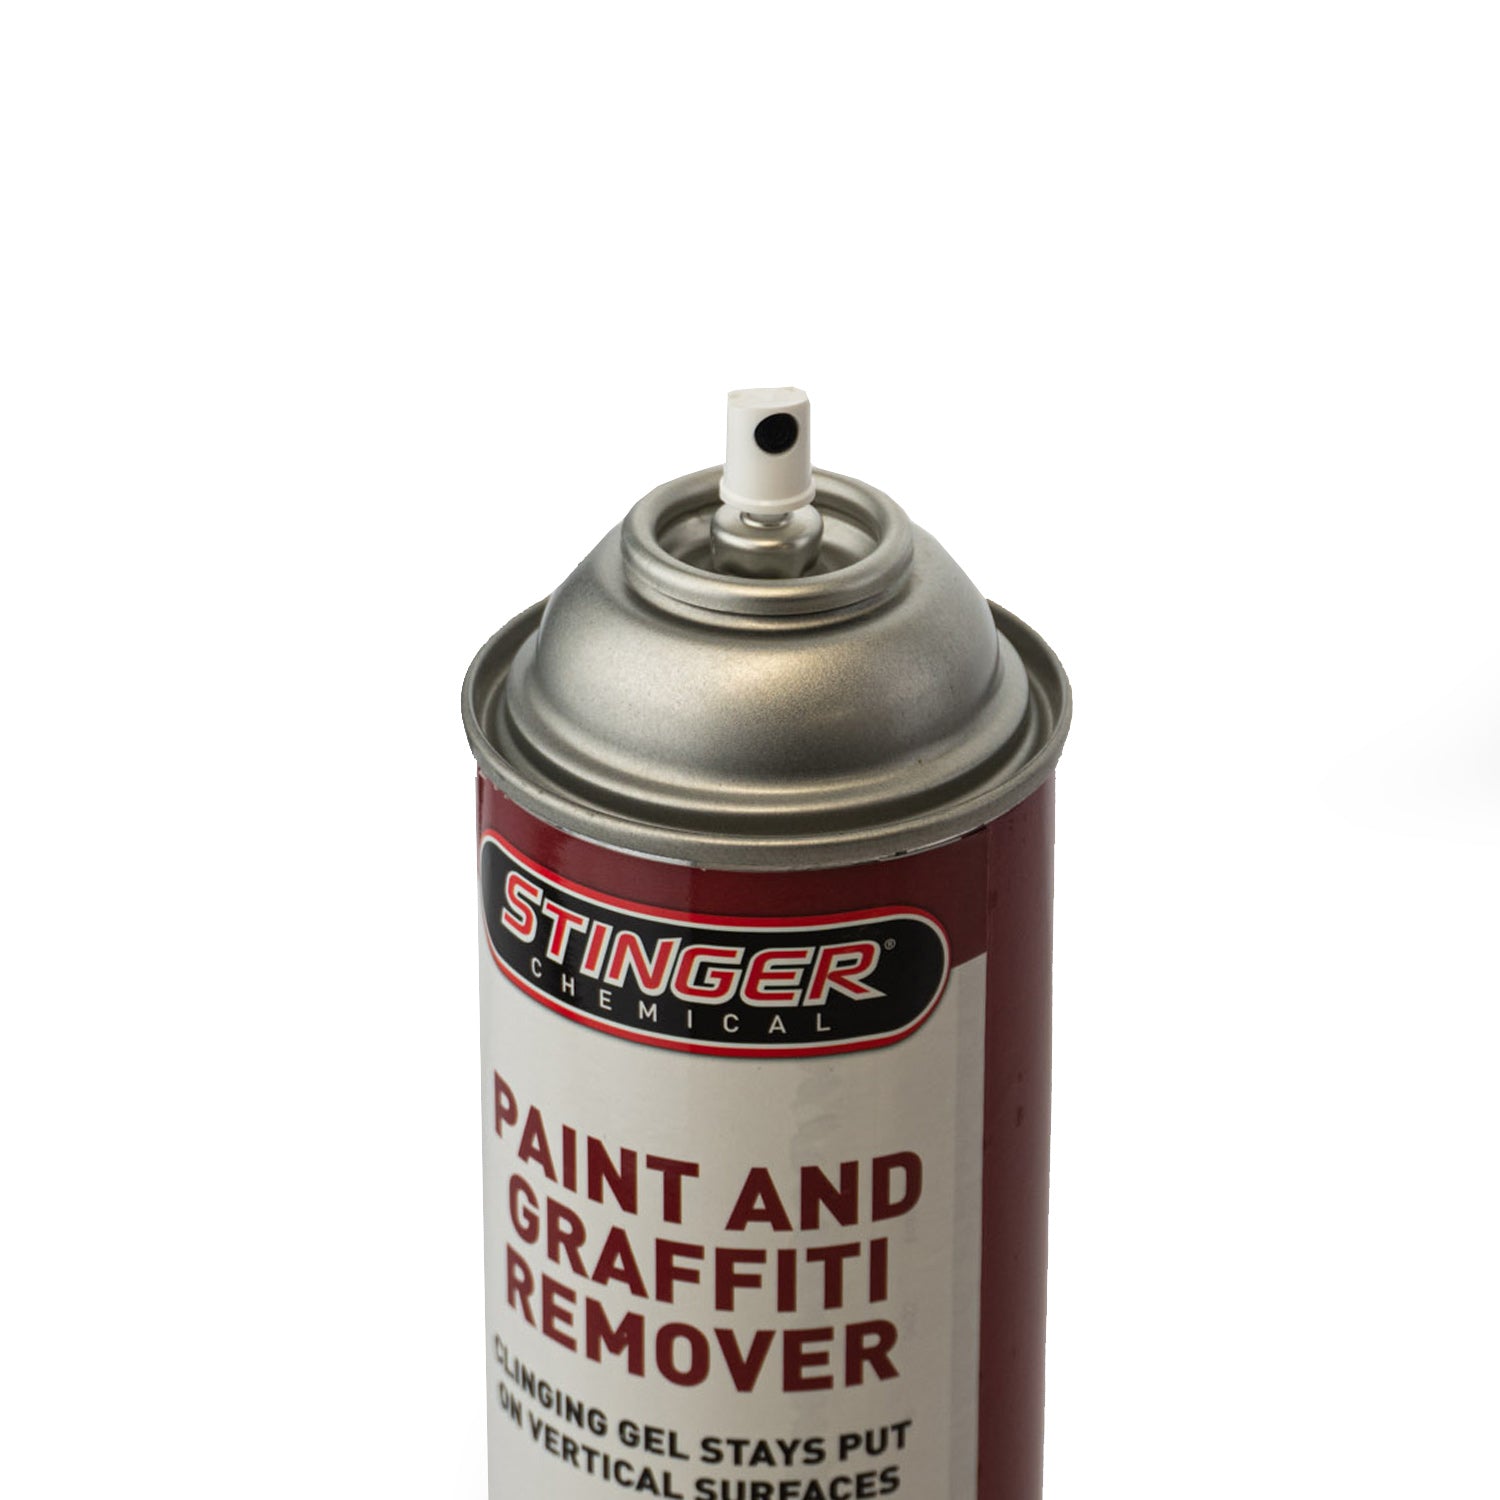 Stinger Chemical Paint & Graffiti Remover